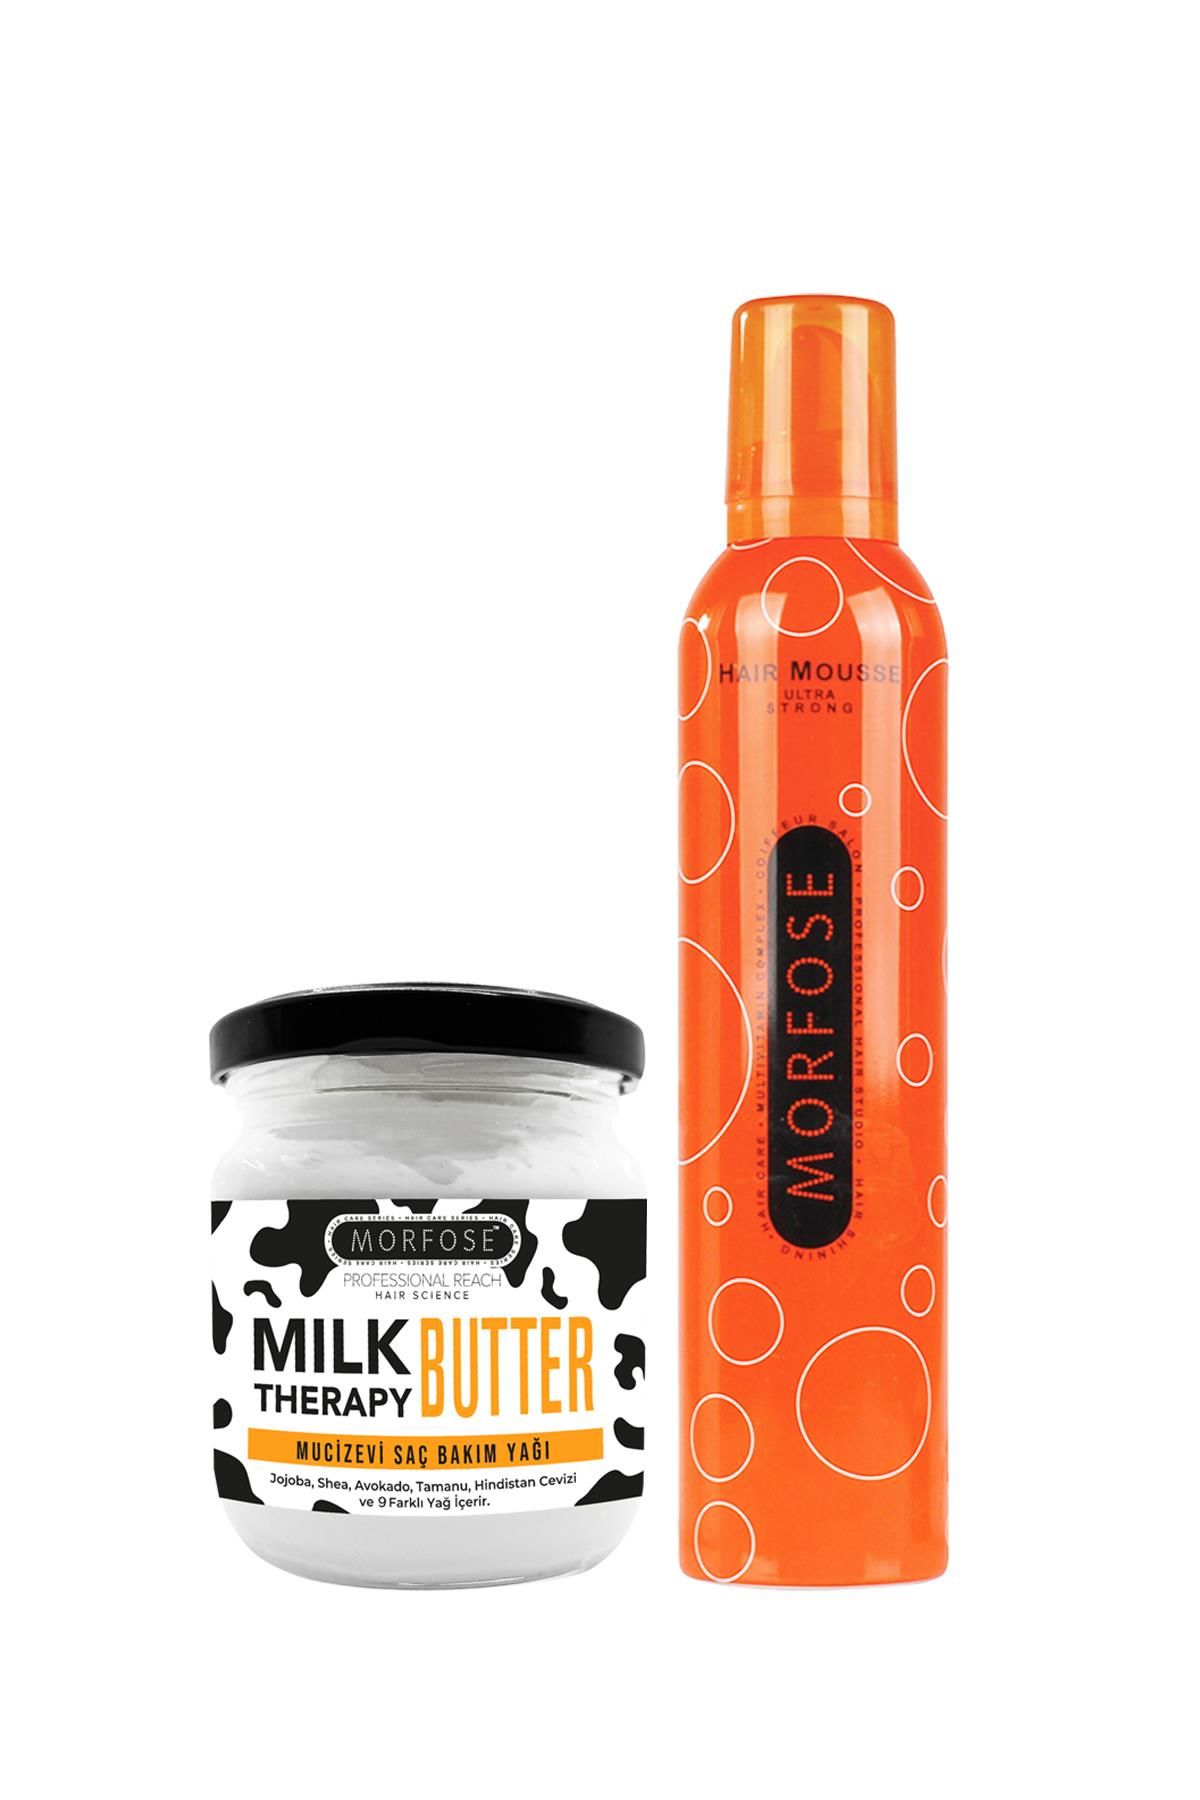 Morfose Milk Therapy Butter + Morfose 350 ML Ultra Strong Saç Köpüğü